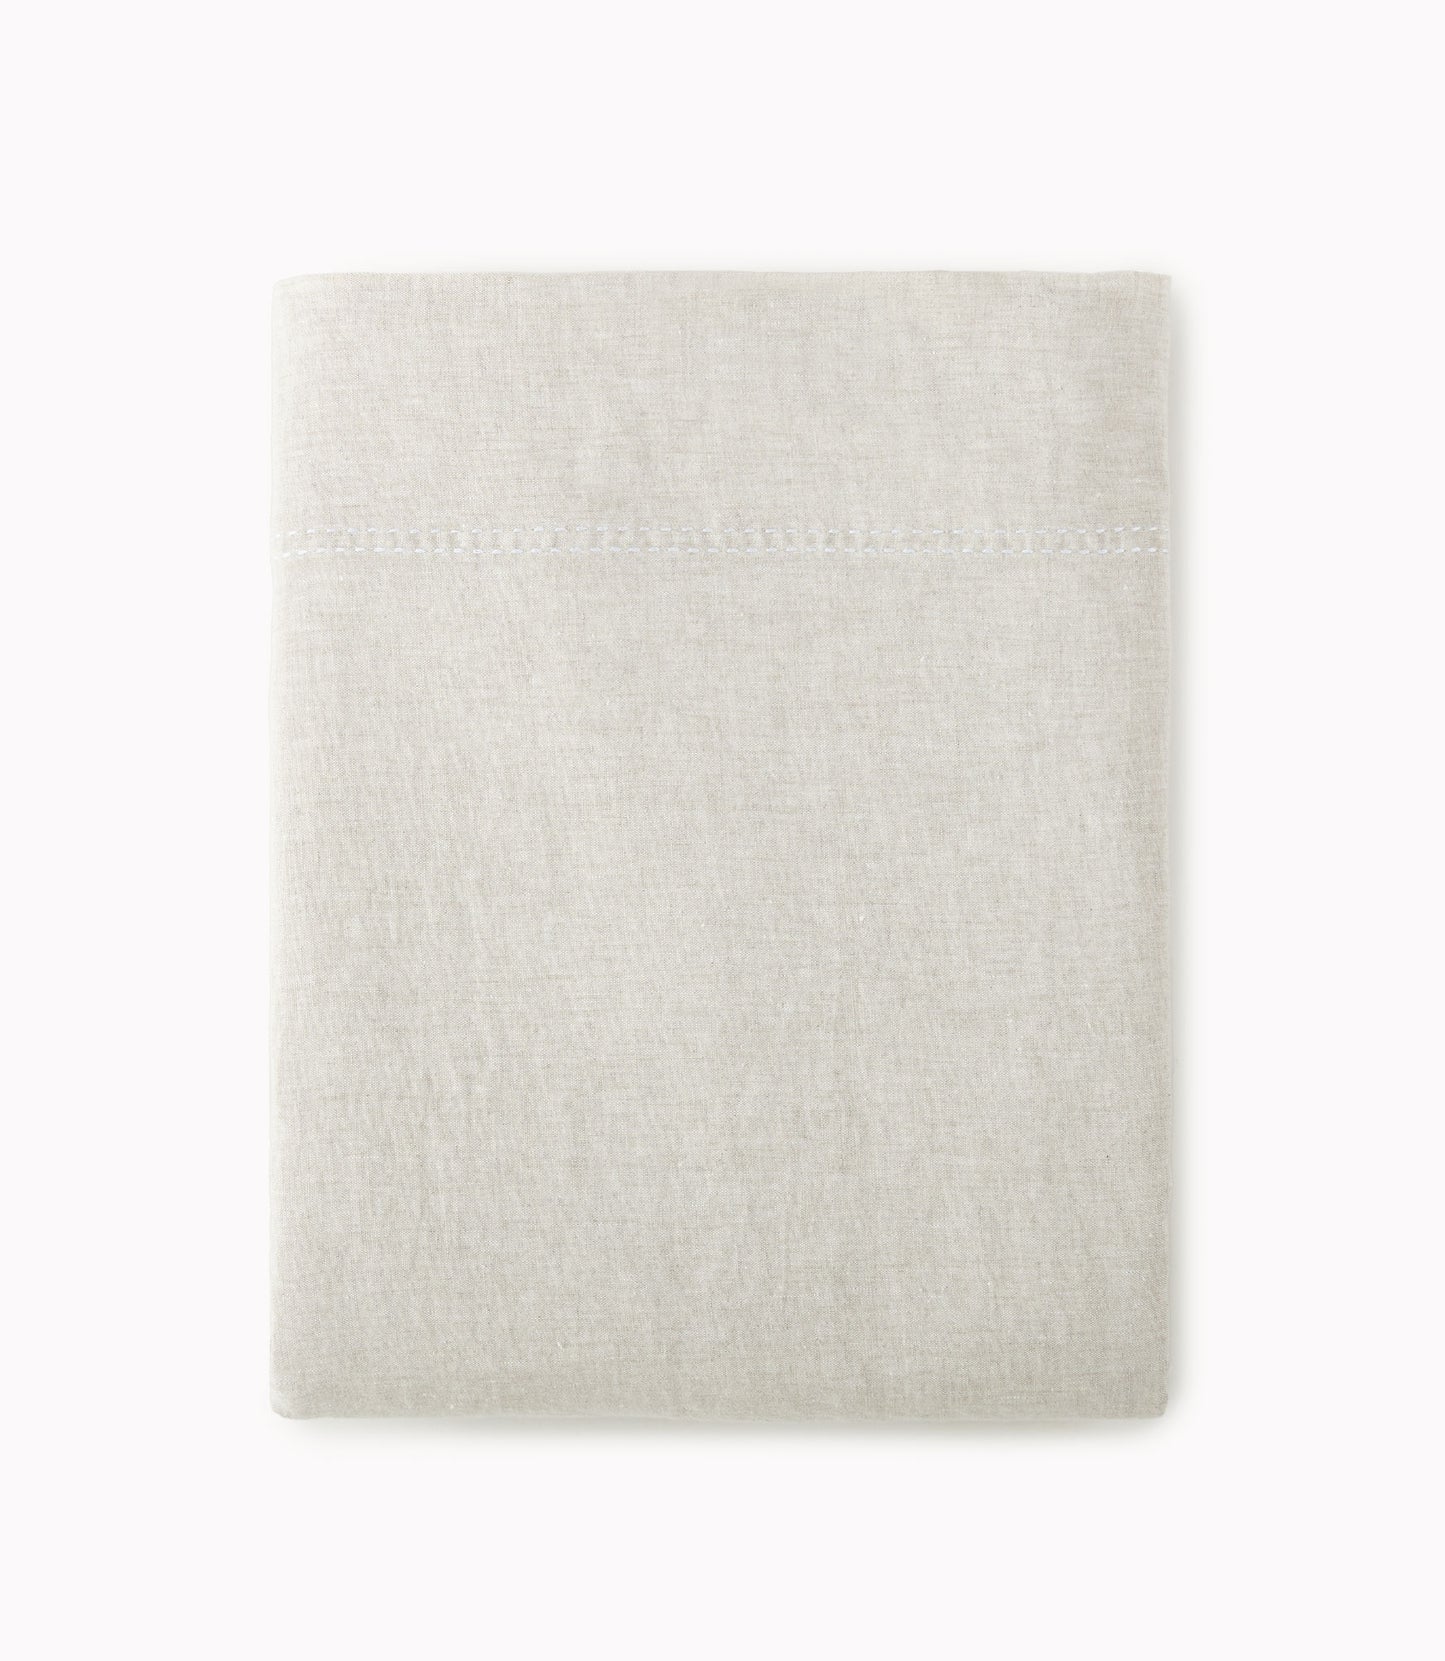 European Washed Linen Flat Sheet, Natural